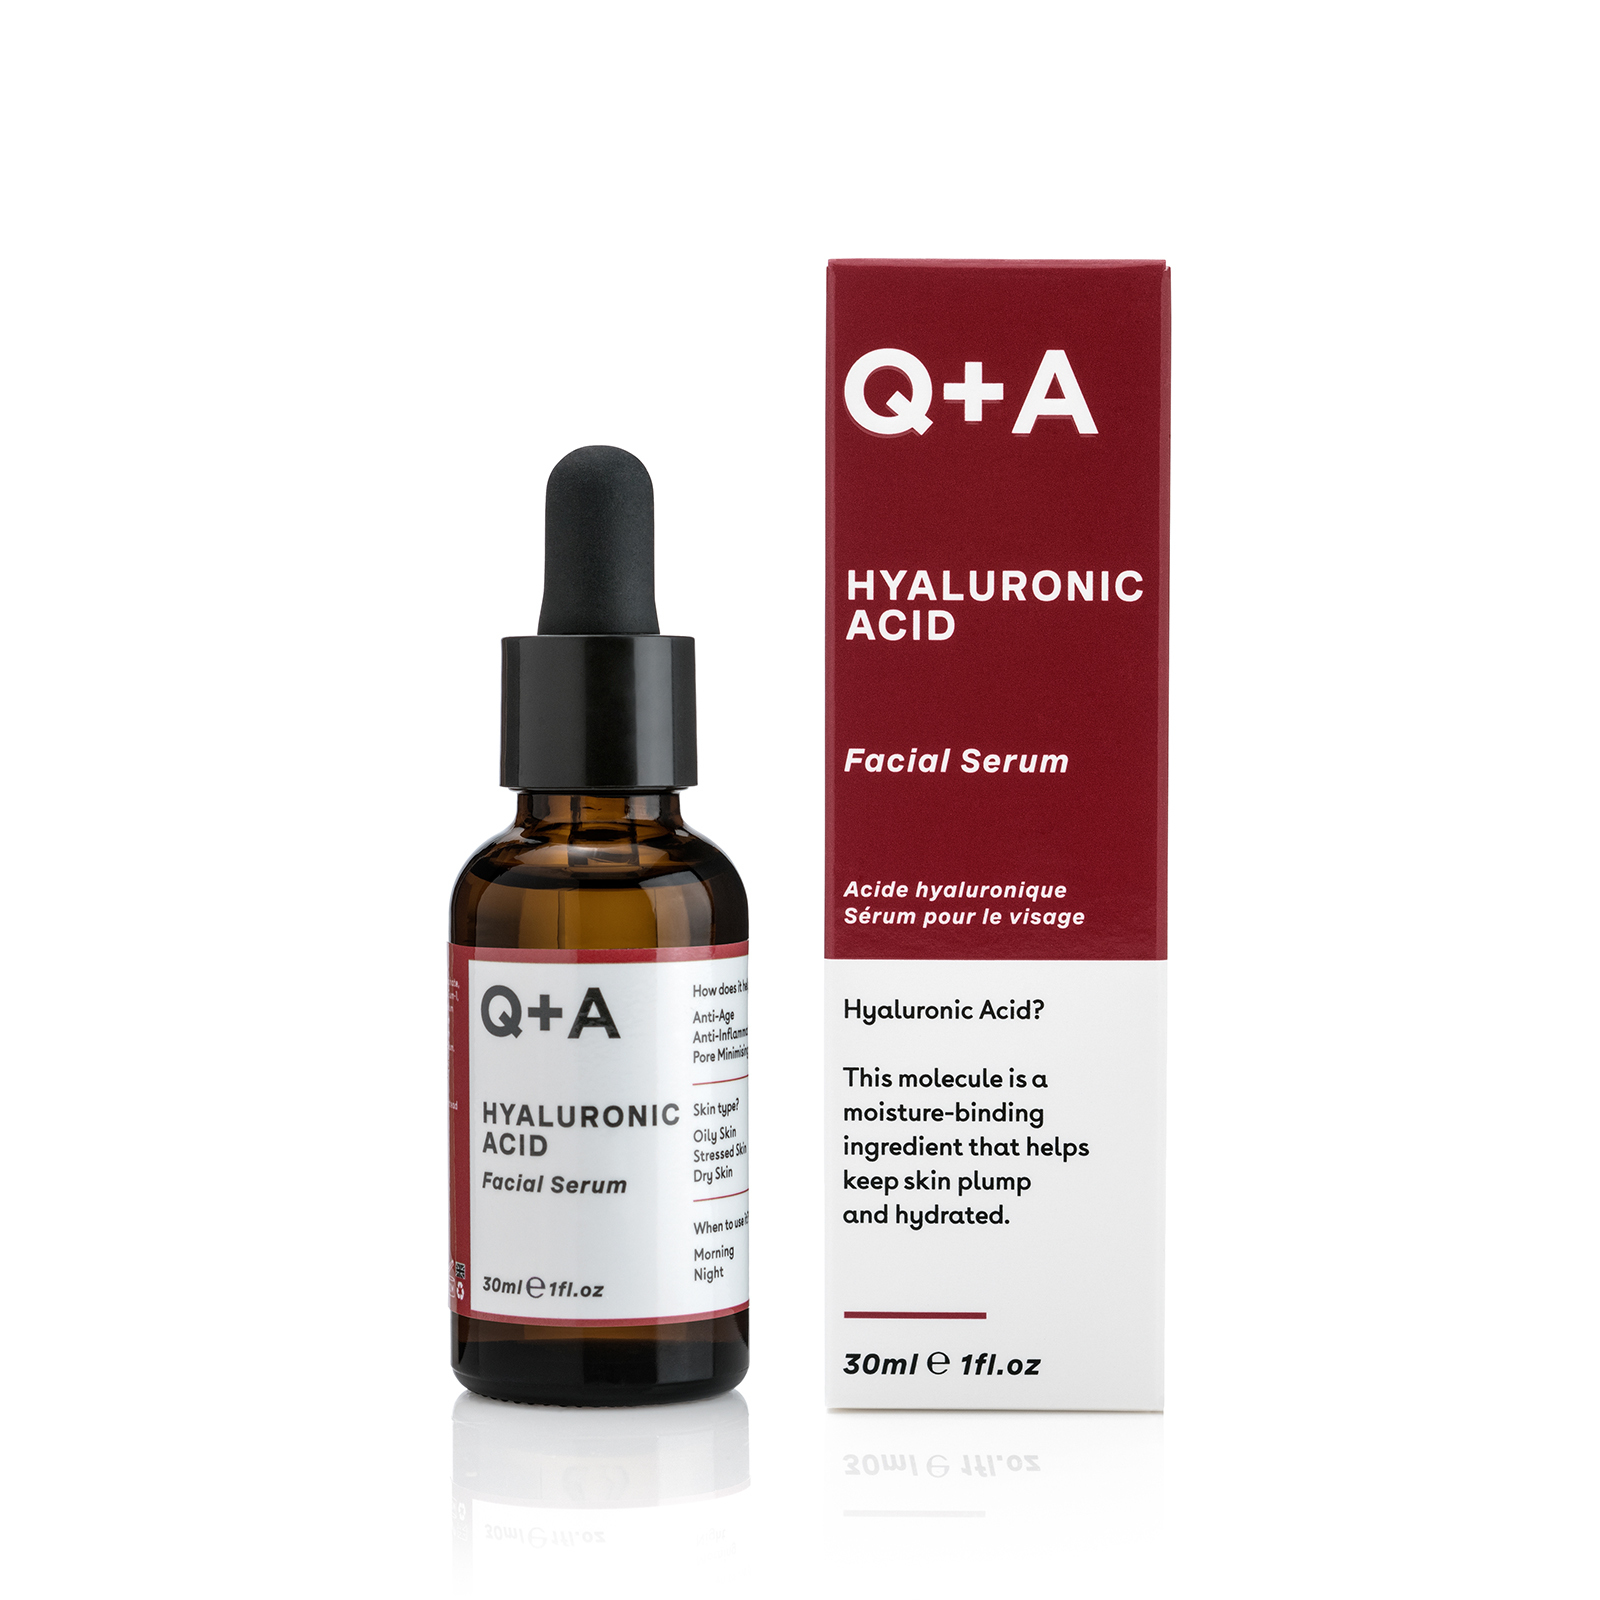 Q+A Hyaluronic Acid Сыворотка для лица 30 ml.